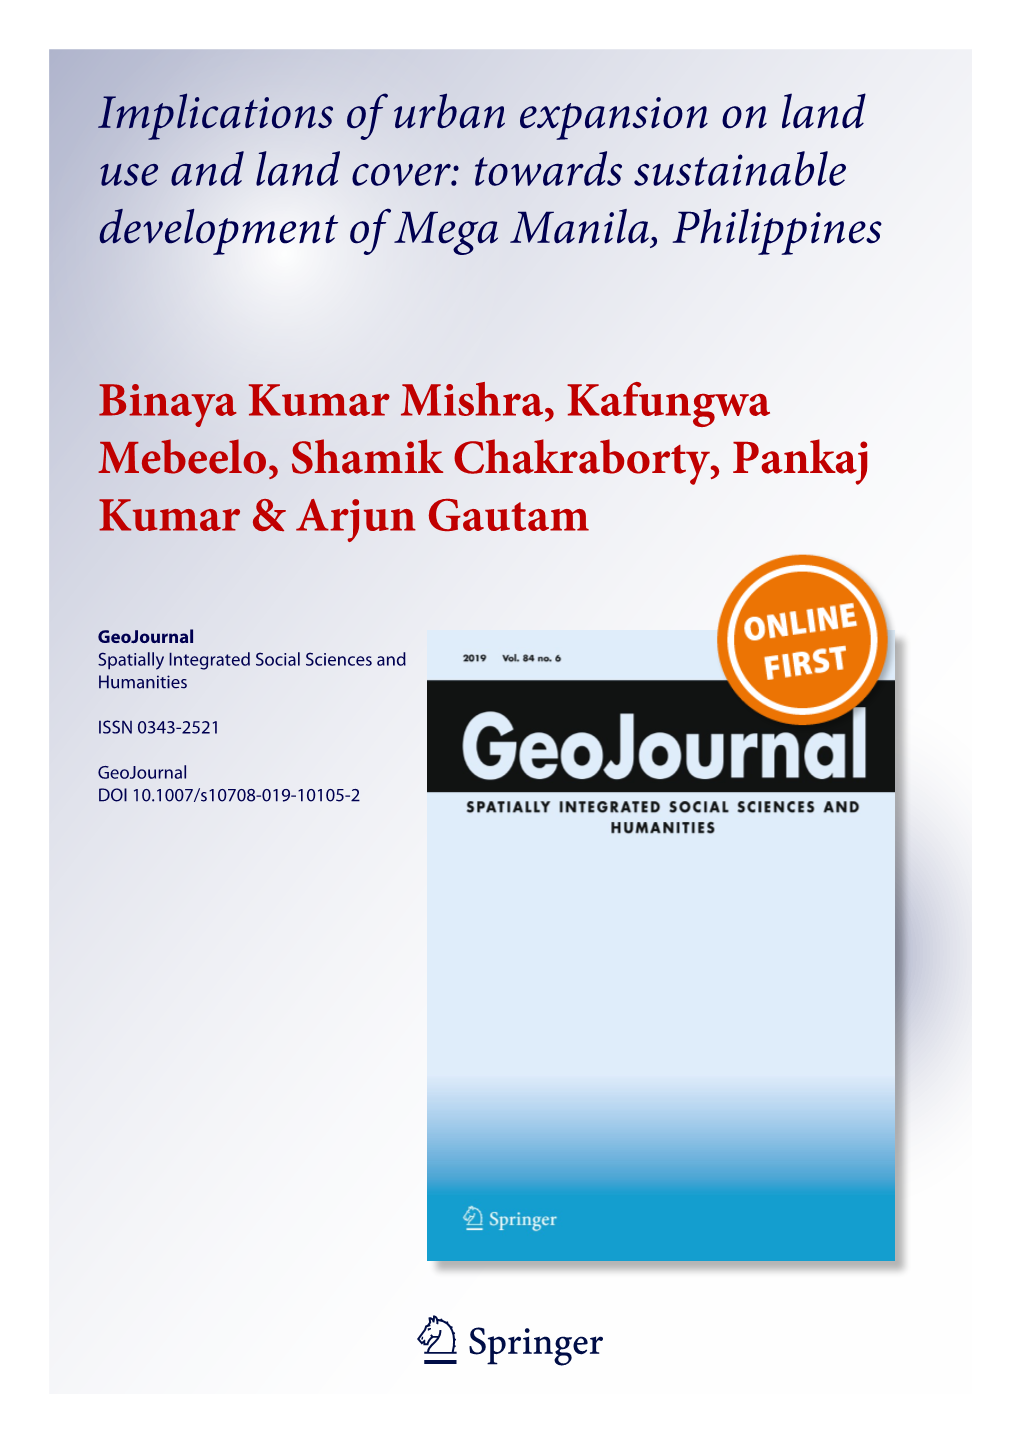 Implications of Urban Expansion on Land Use and Land Cover: Towards Sustainable Development of Mega Manila, Philippines